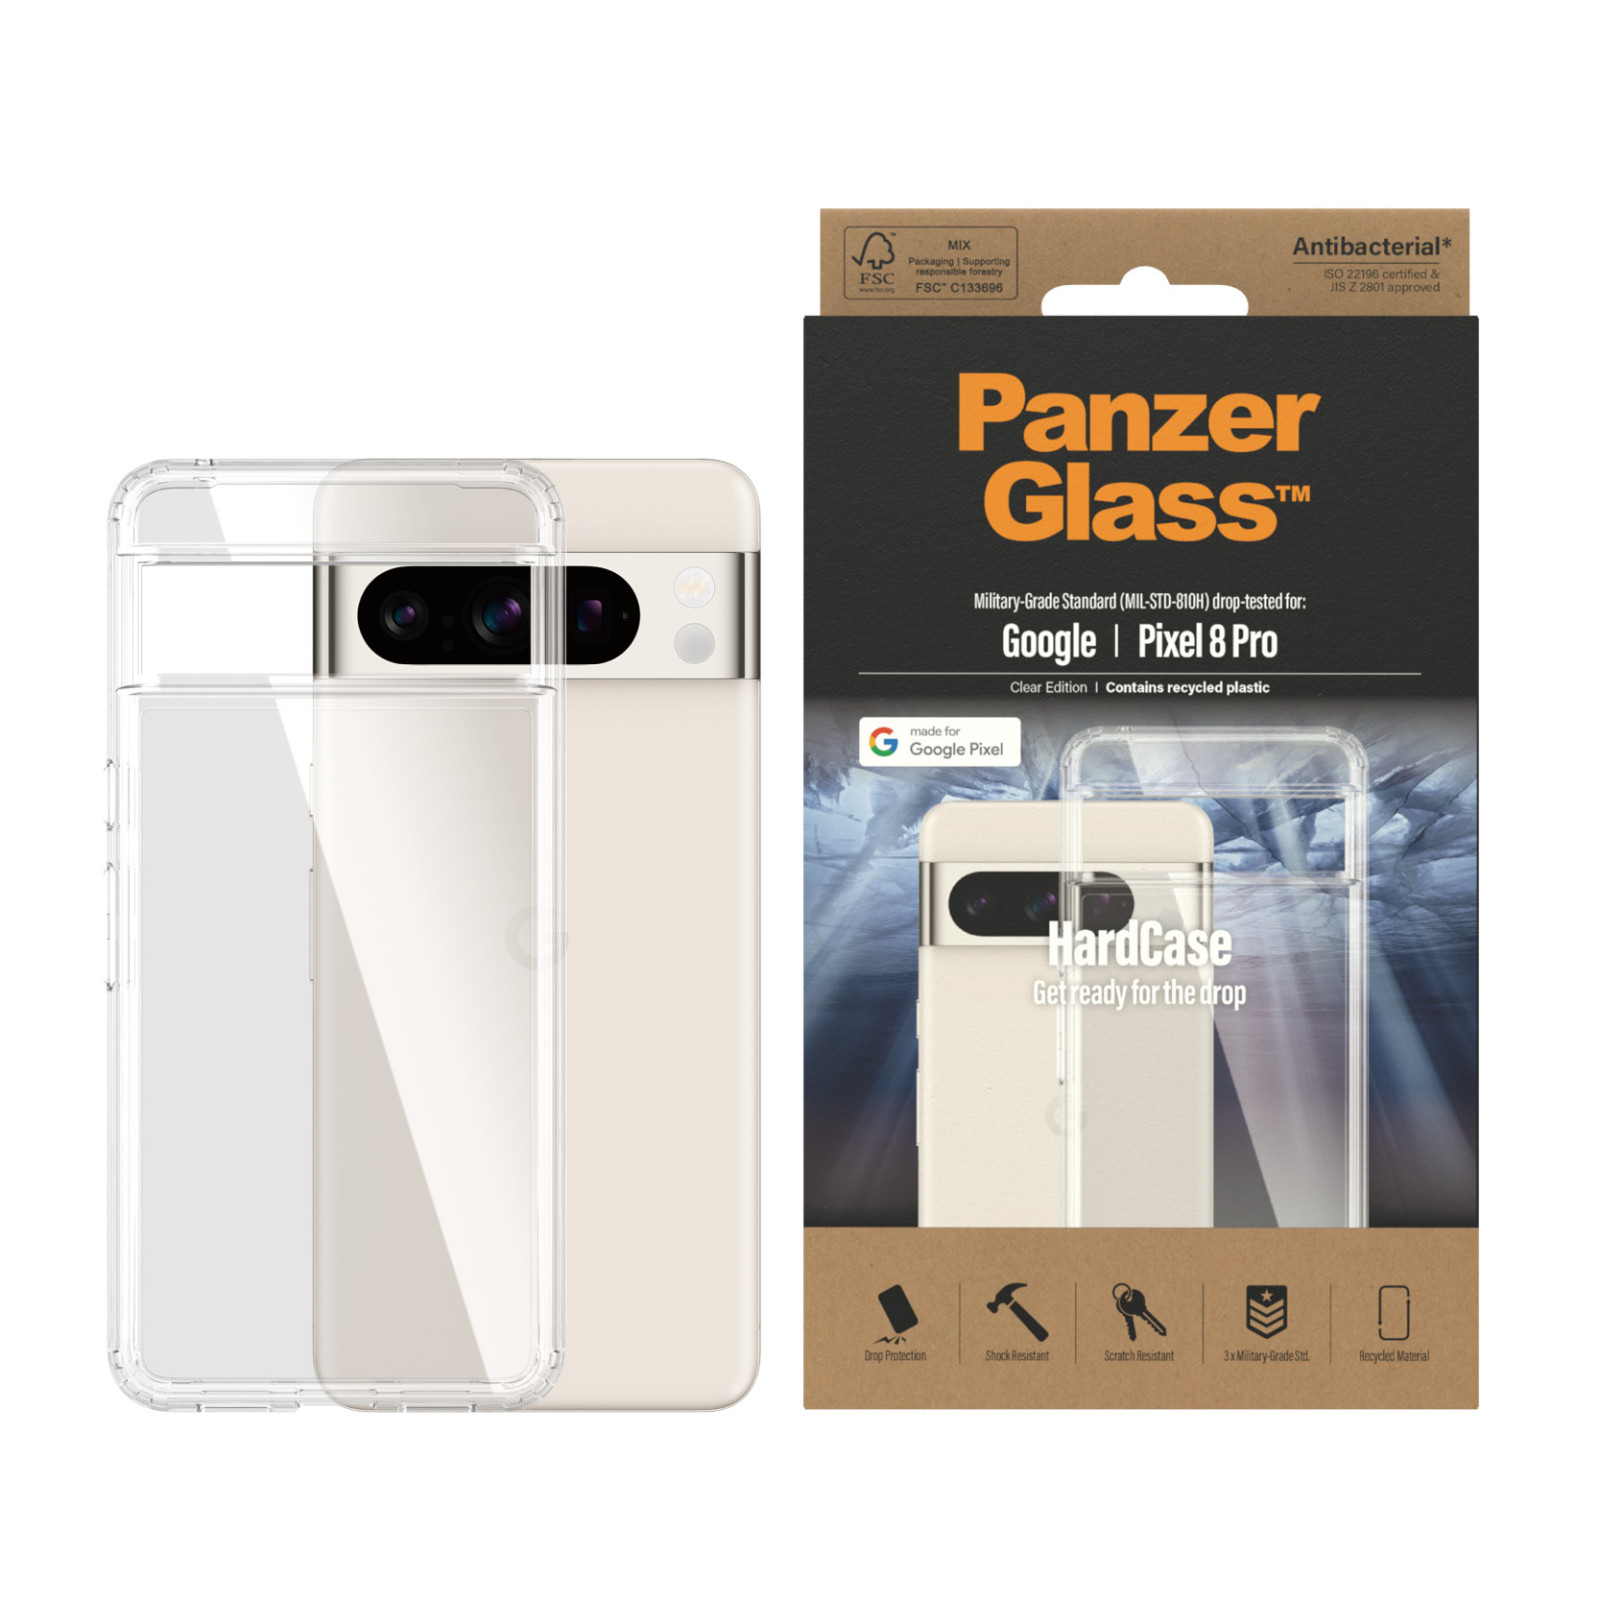 Гръб PanzerGlass  за Google Pixel 8 Pro , Hard Case, Antibacterial, Прозрачен